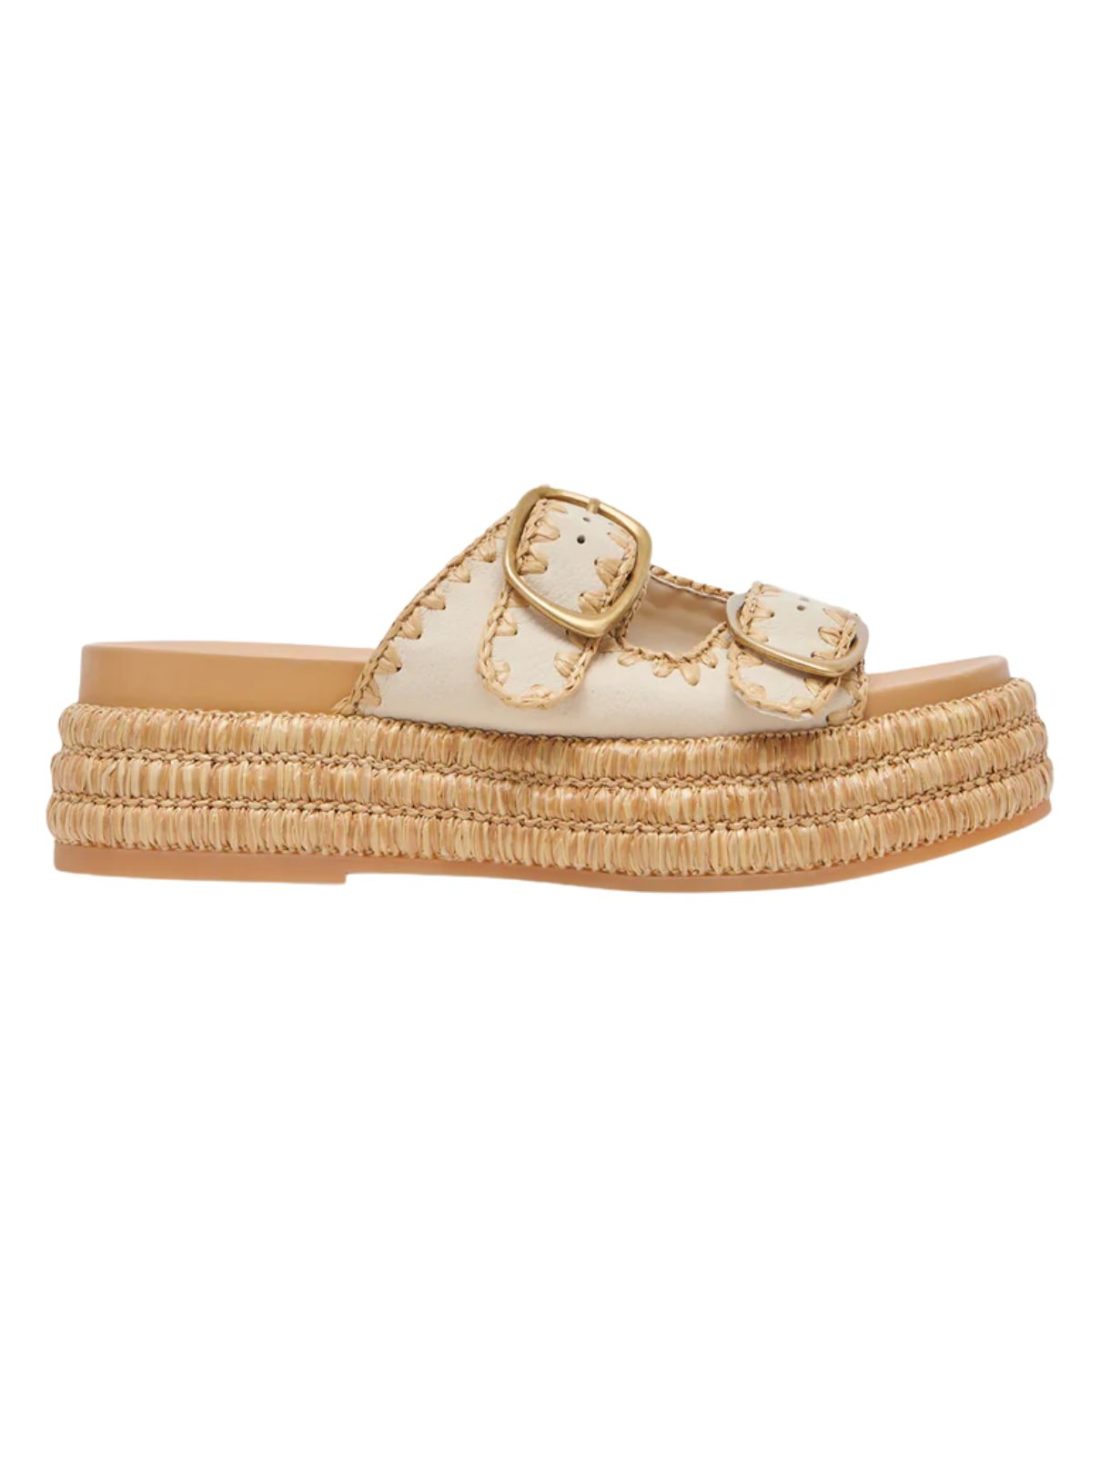 dolce vita wanika sandal in sand nubuck